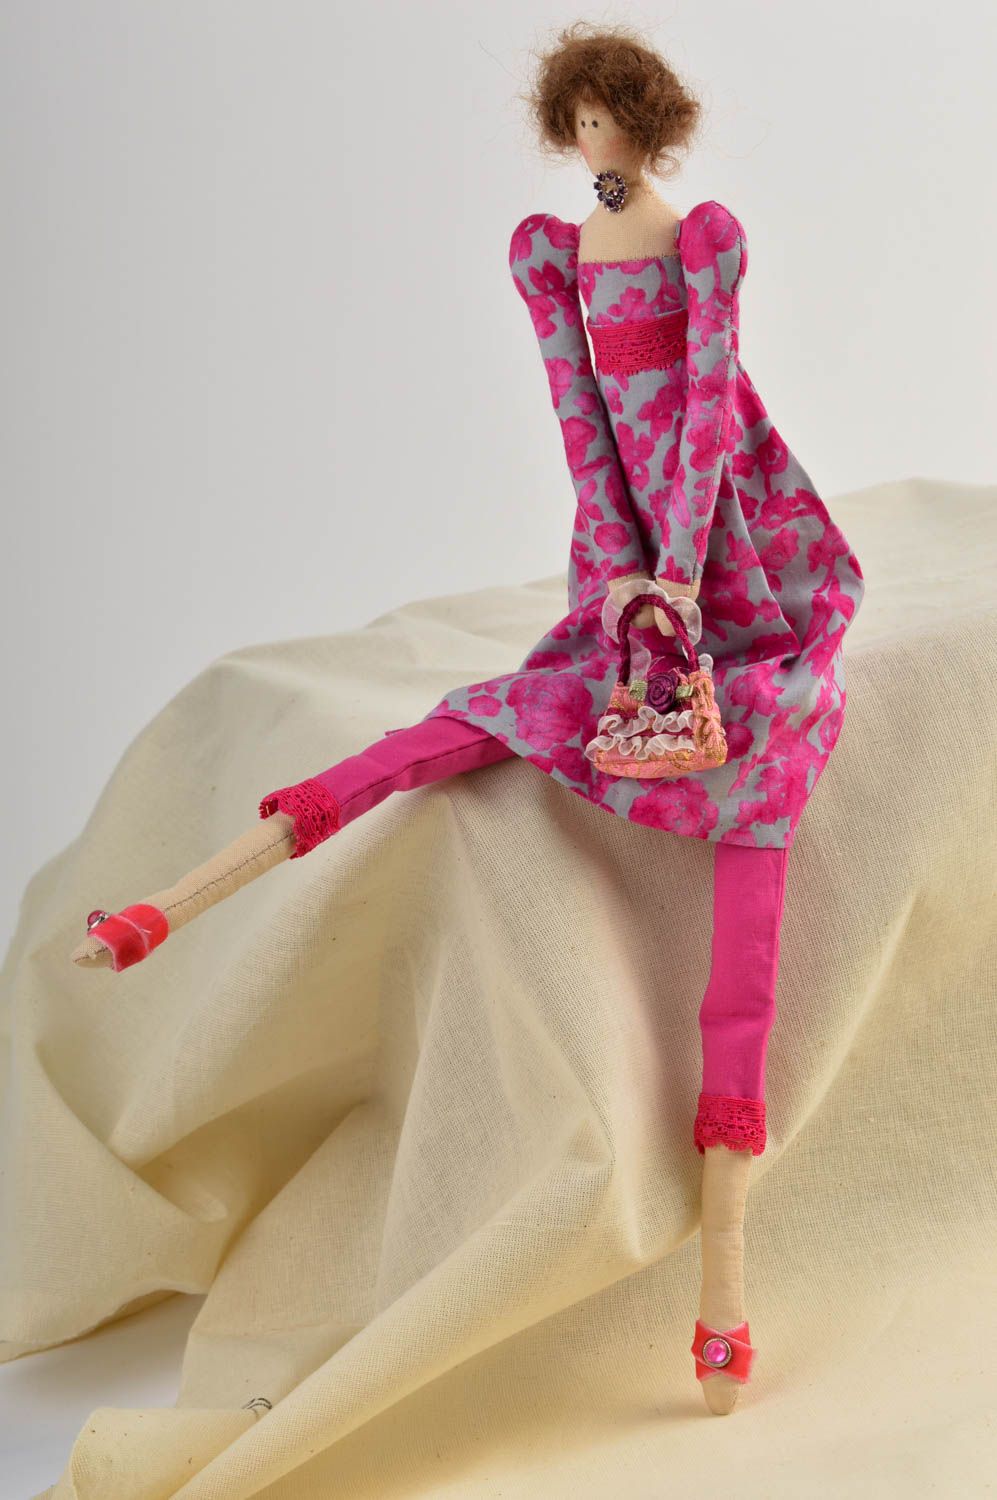 Handmade doll in pink dress stuffed toy designer childrens toy decoration ideas photo 1